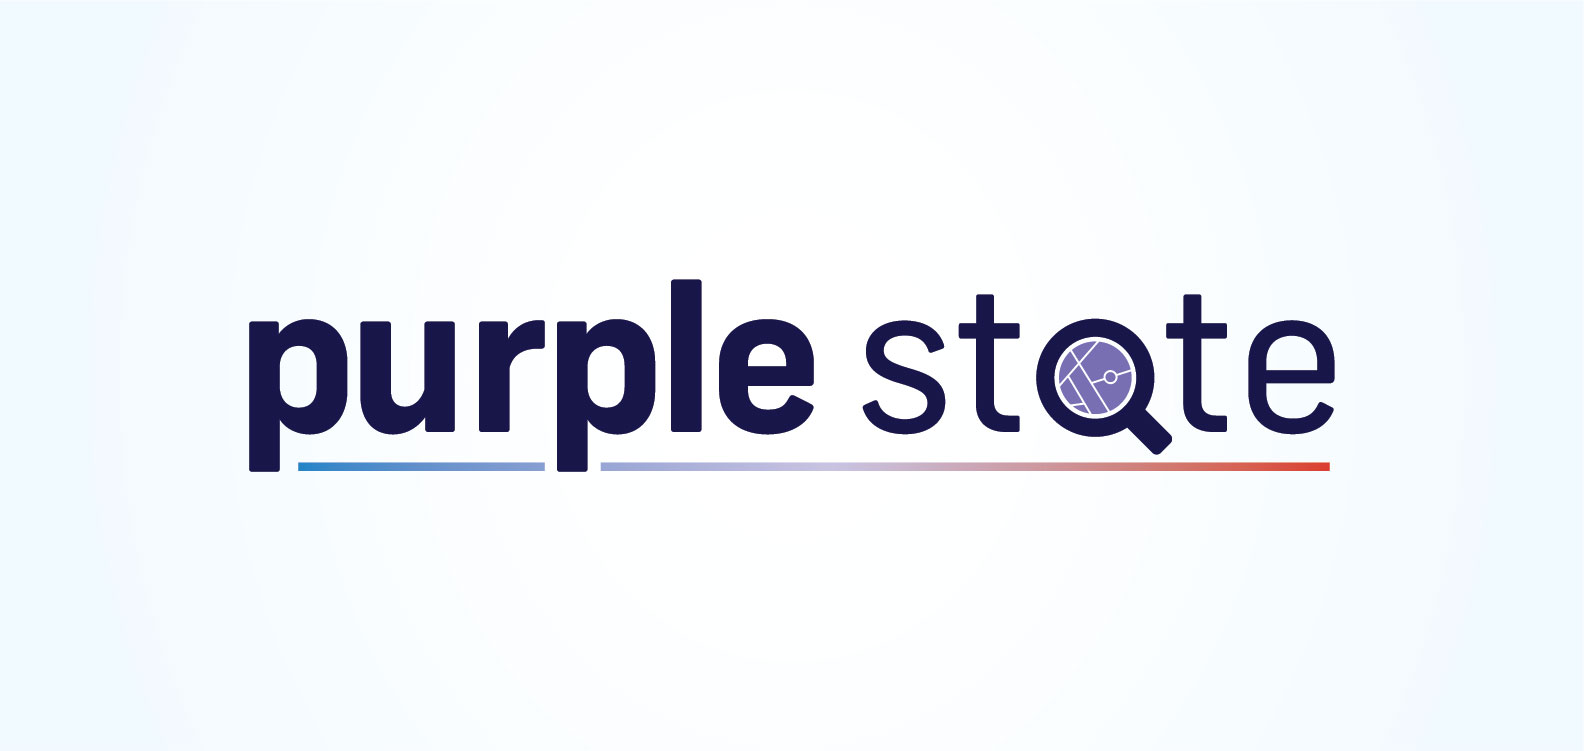 PurpleState